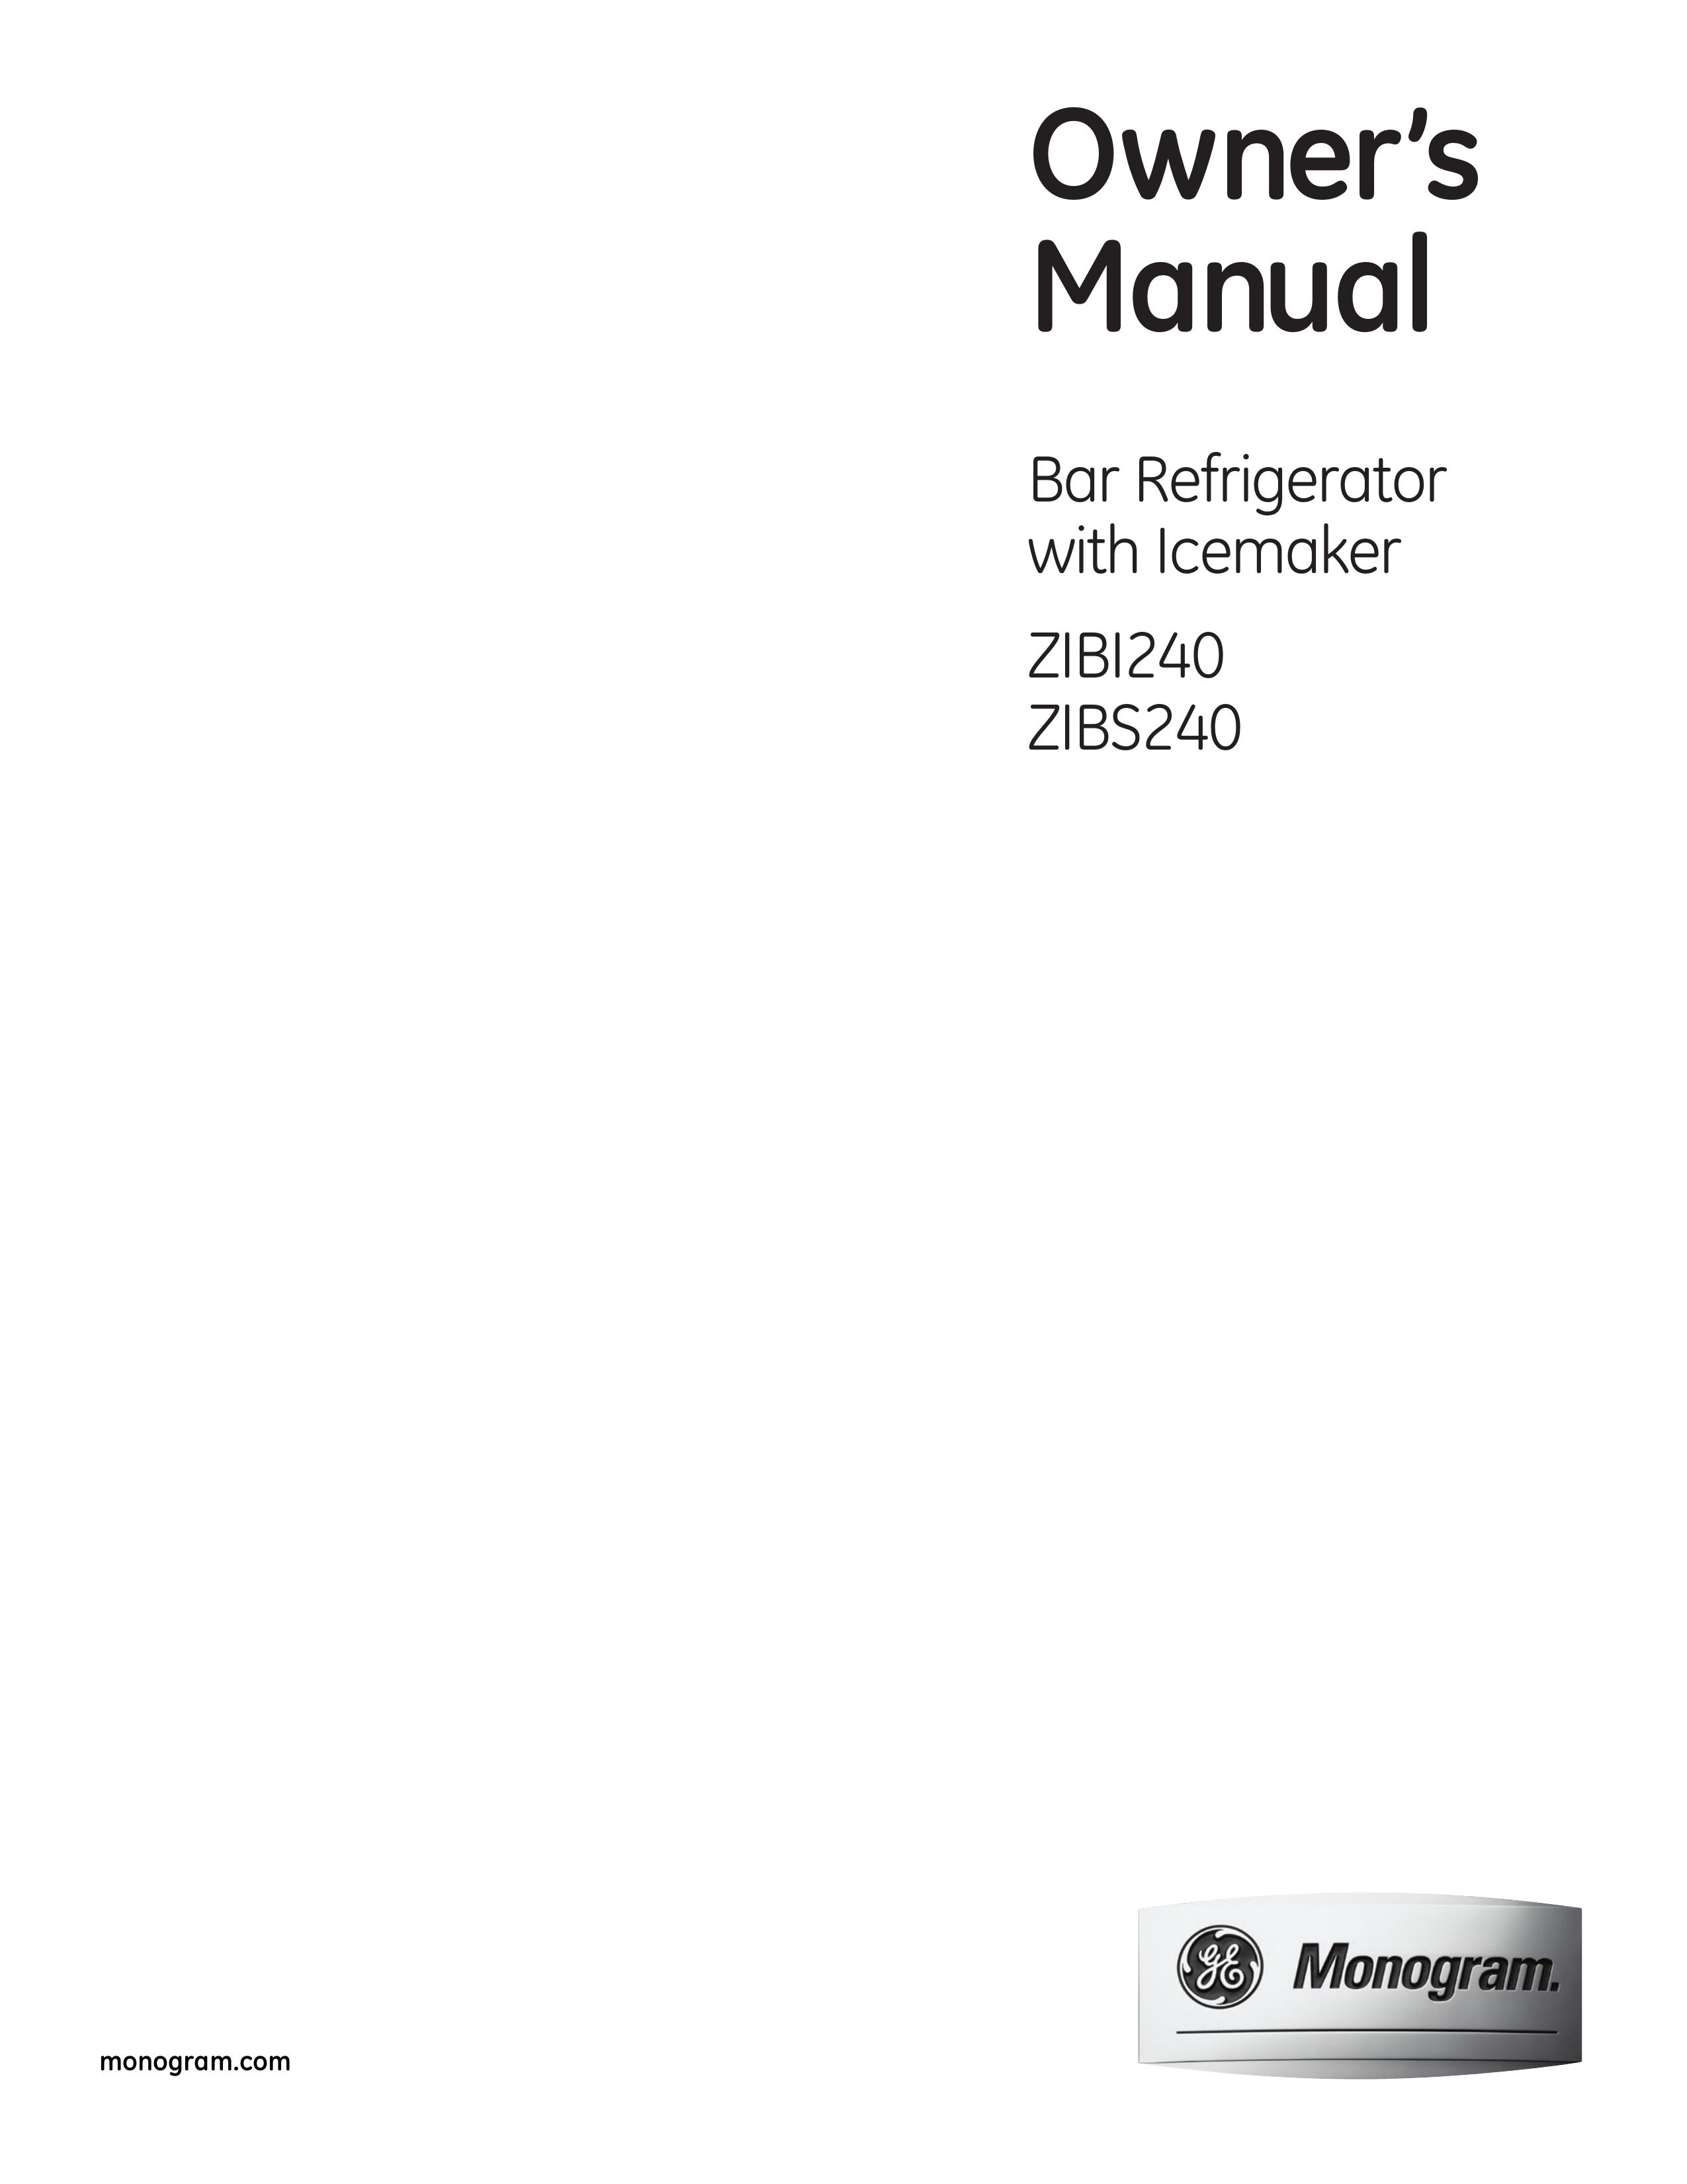 GE Monogram ZIBI240 Refrigerator User Manual